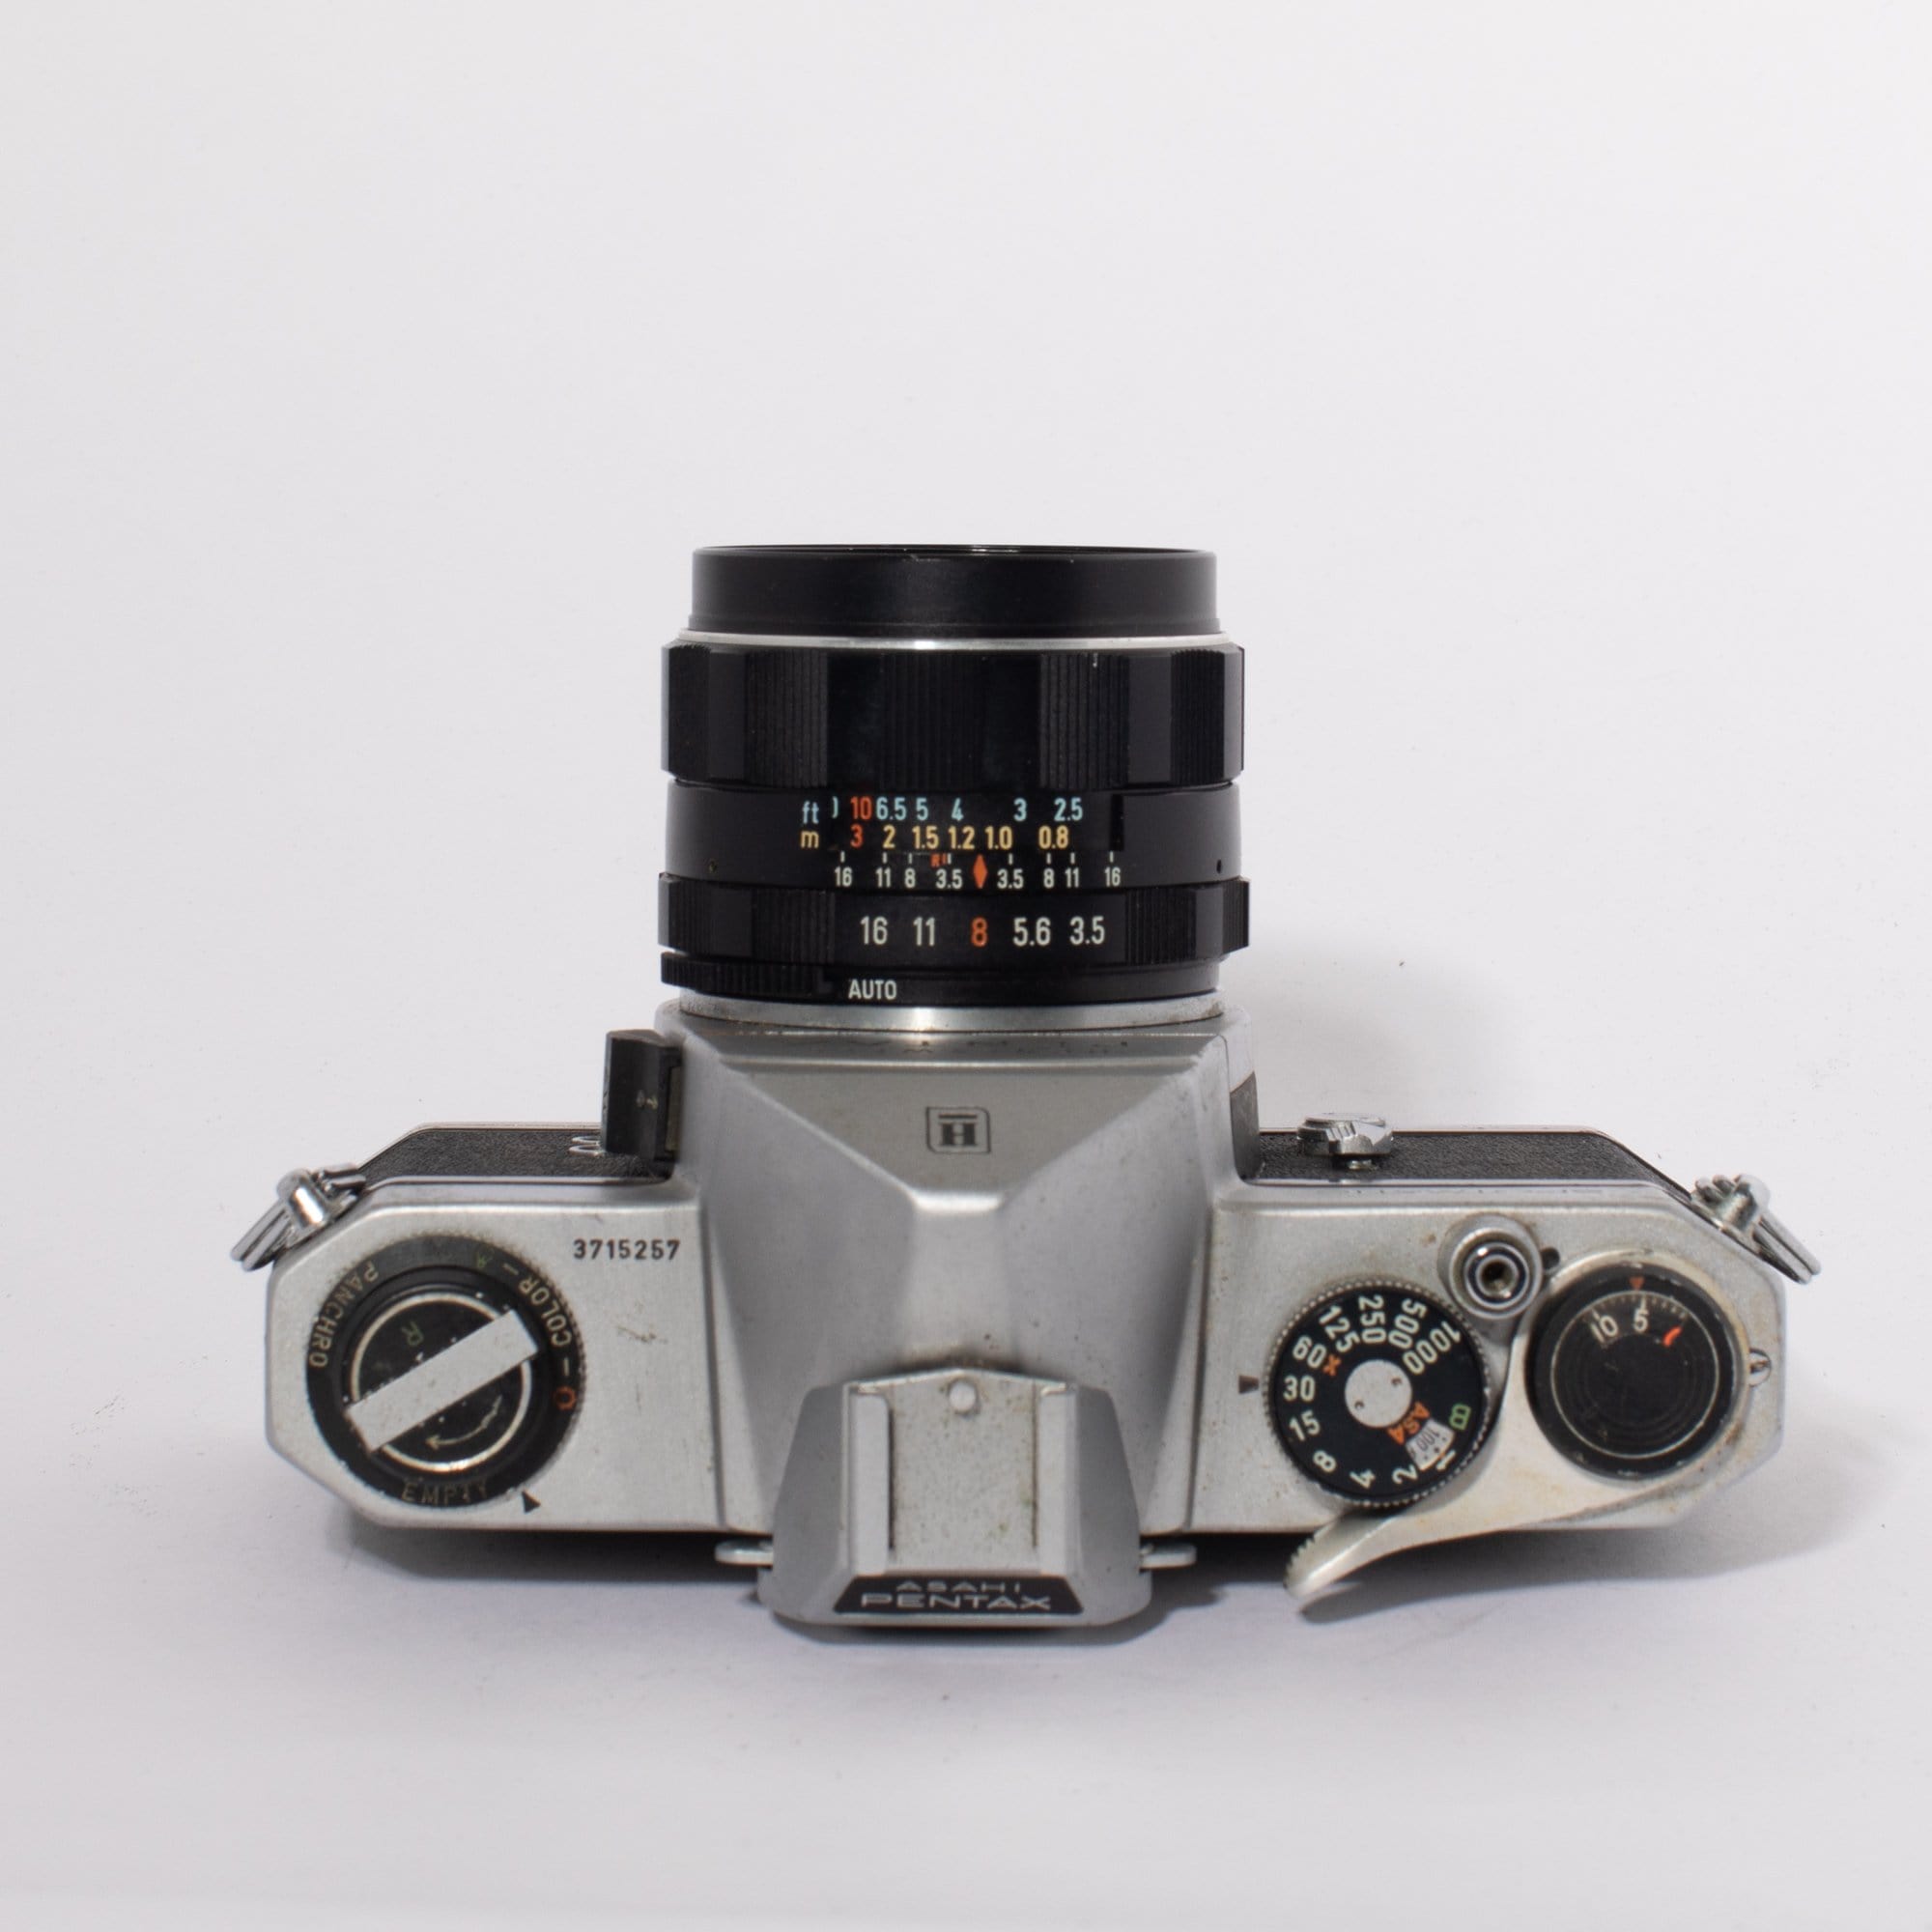 Honeywell Pentax Spotmatic (28mm and 200mm Kit) - FRESH CLA – Film 